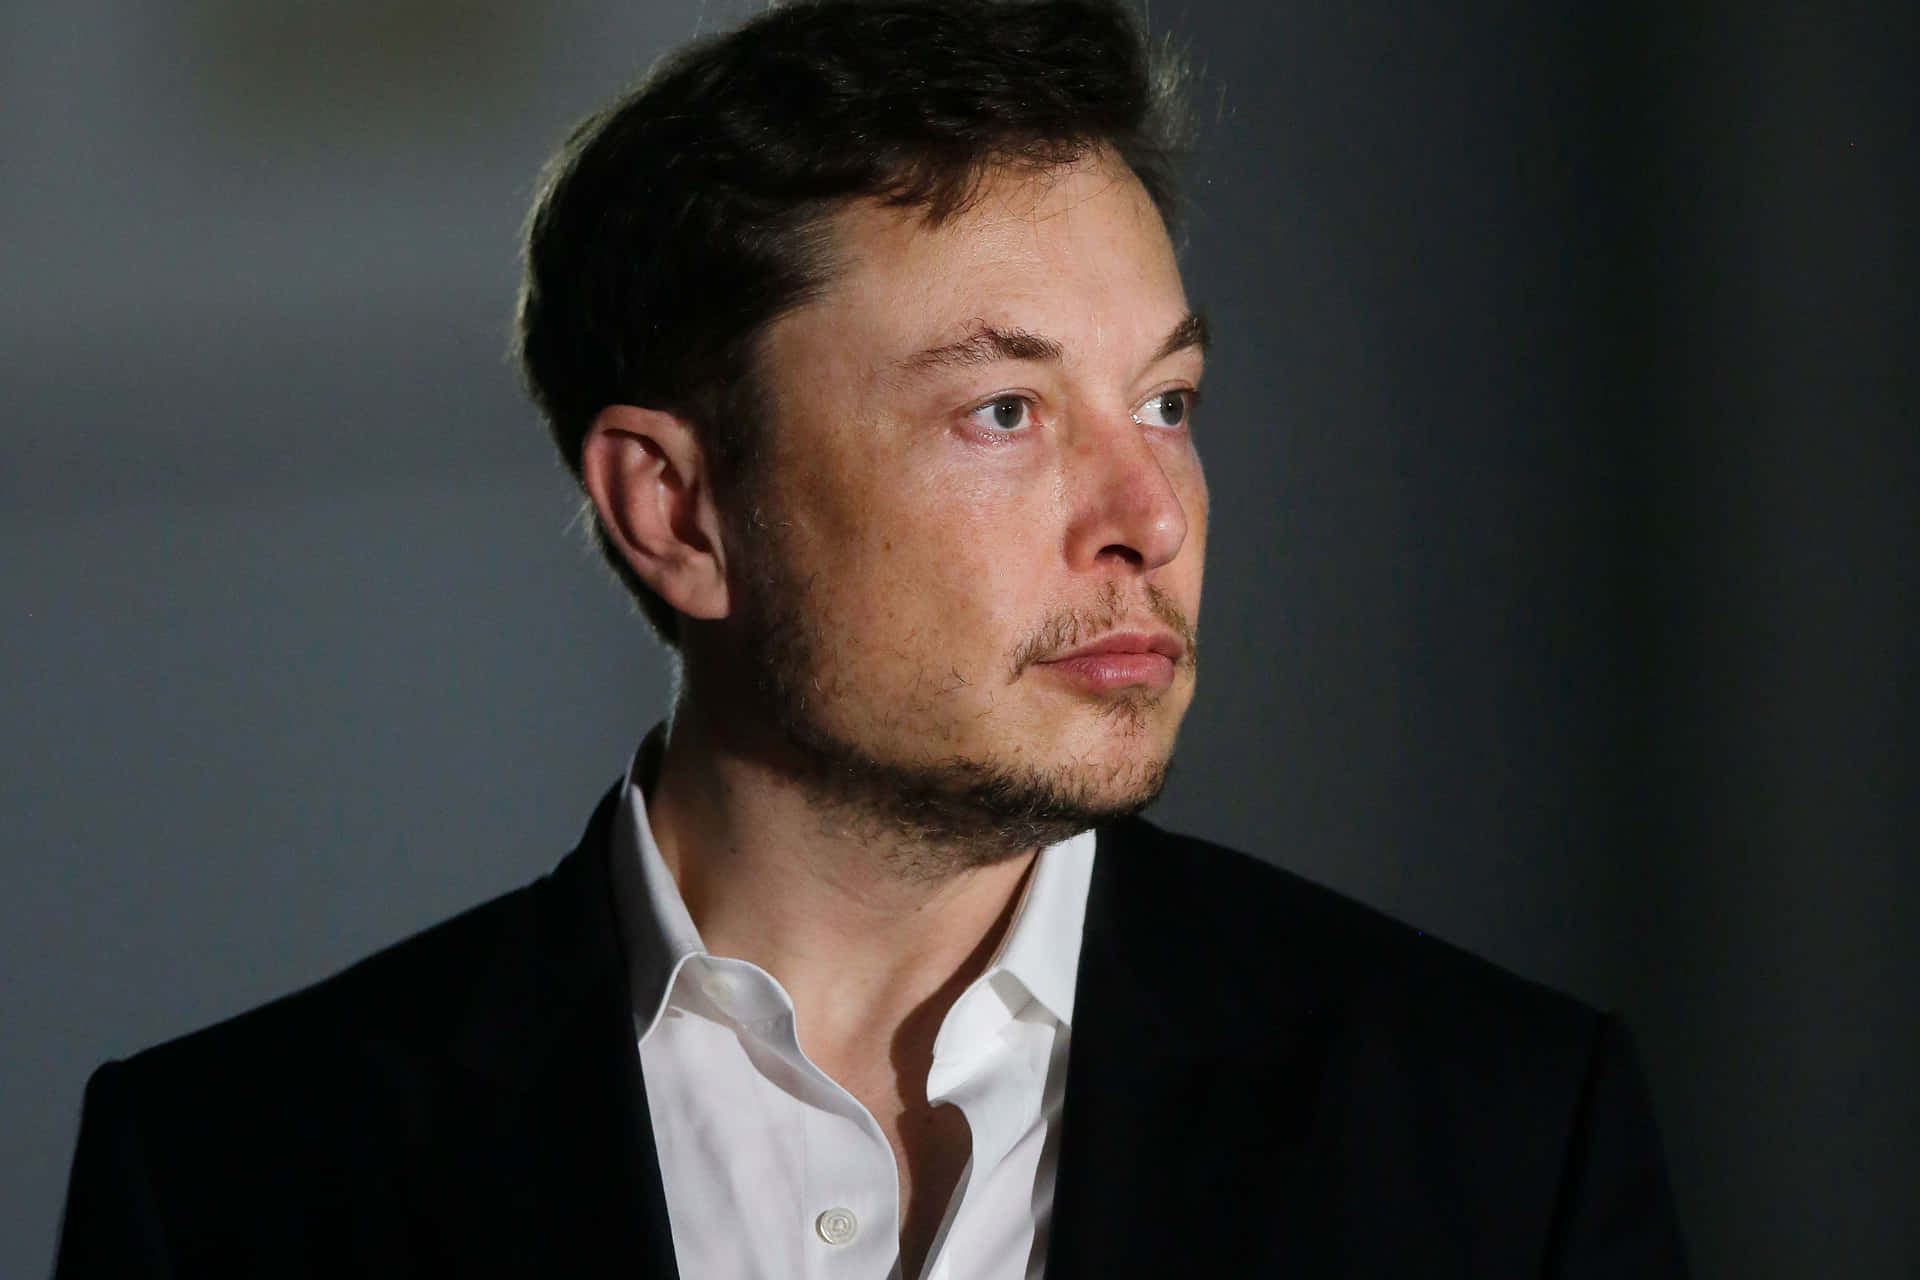 Visionary entrepreneur Elon Musk